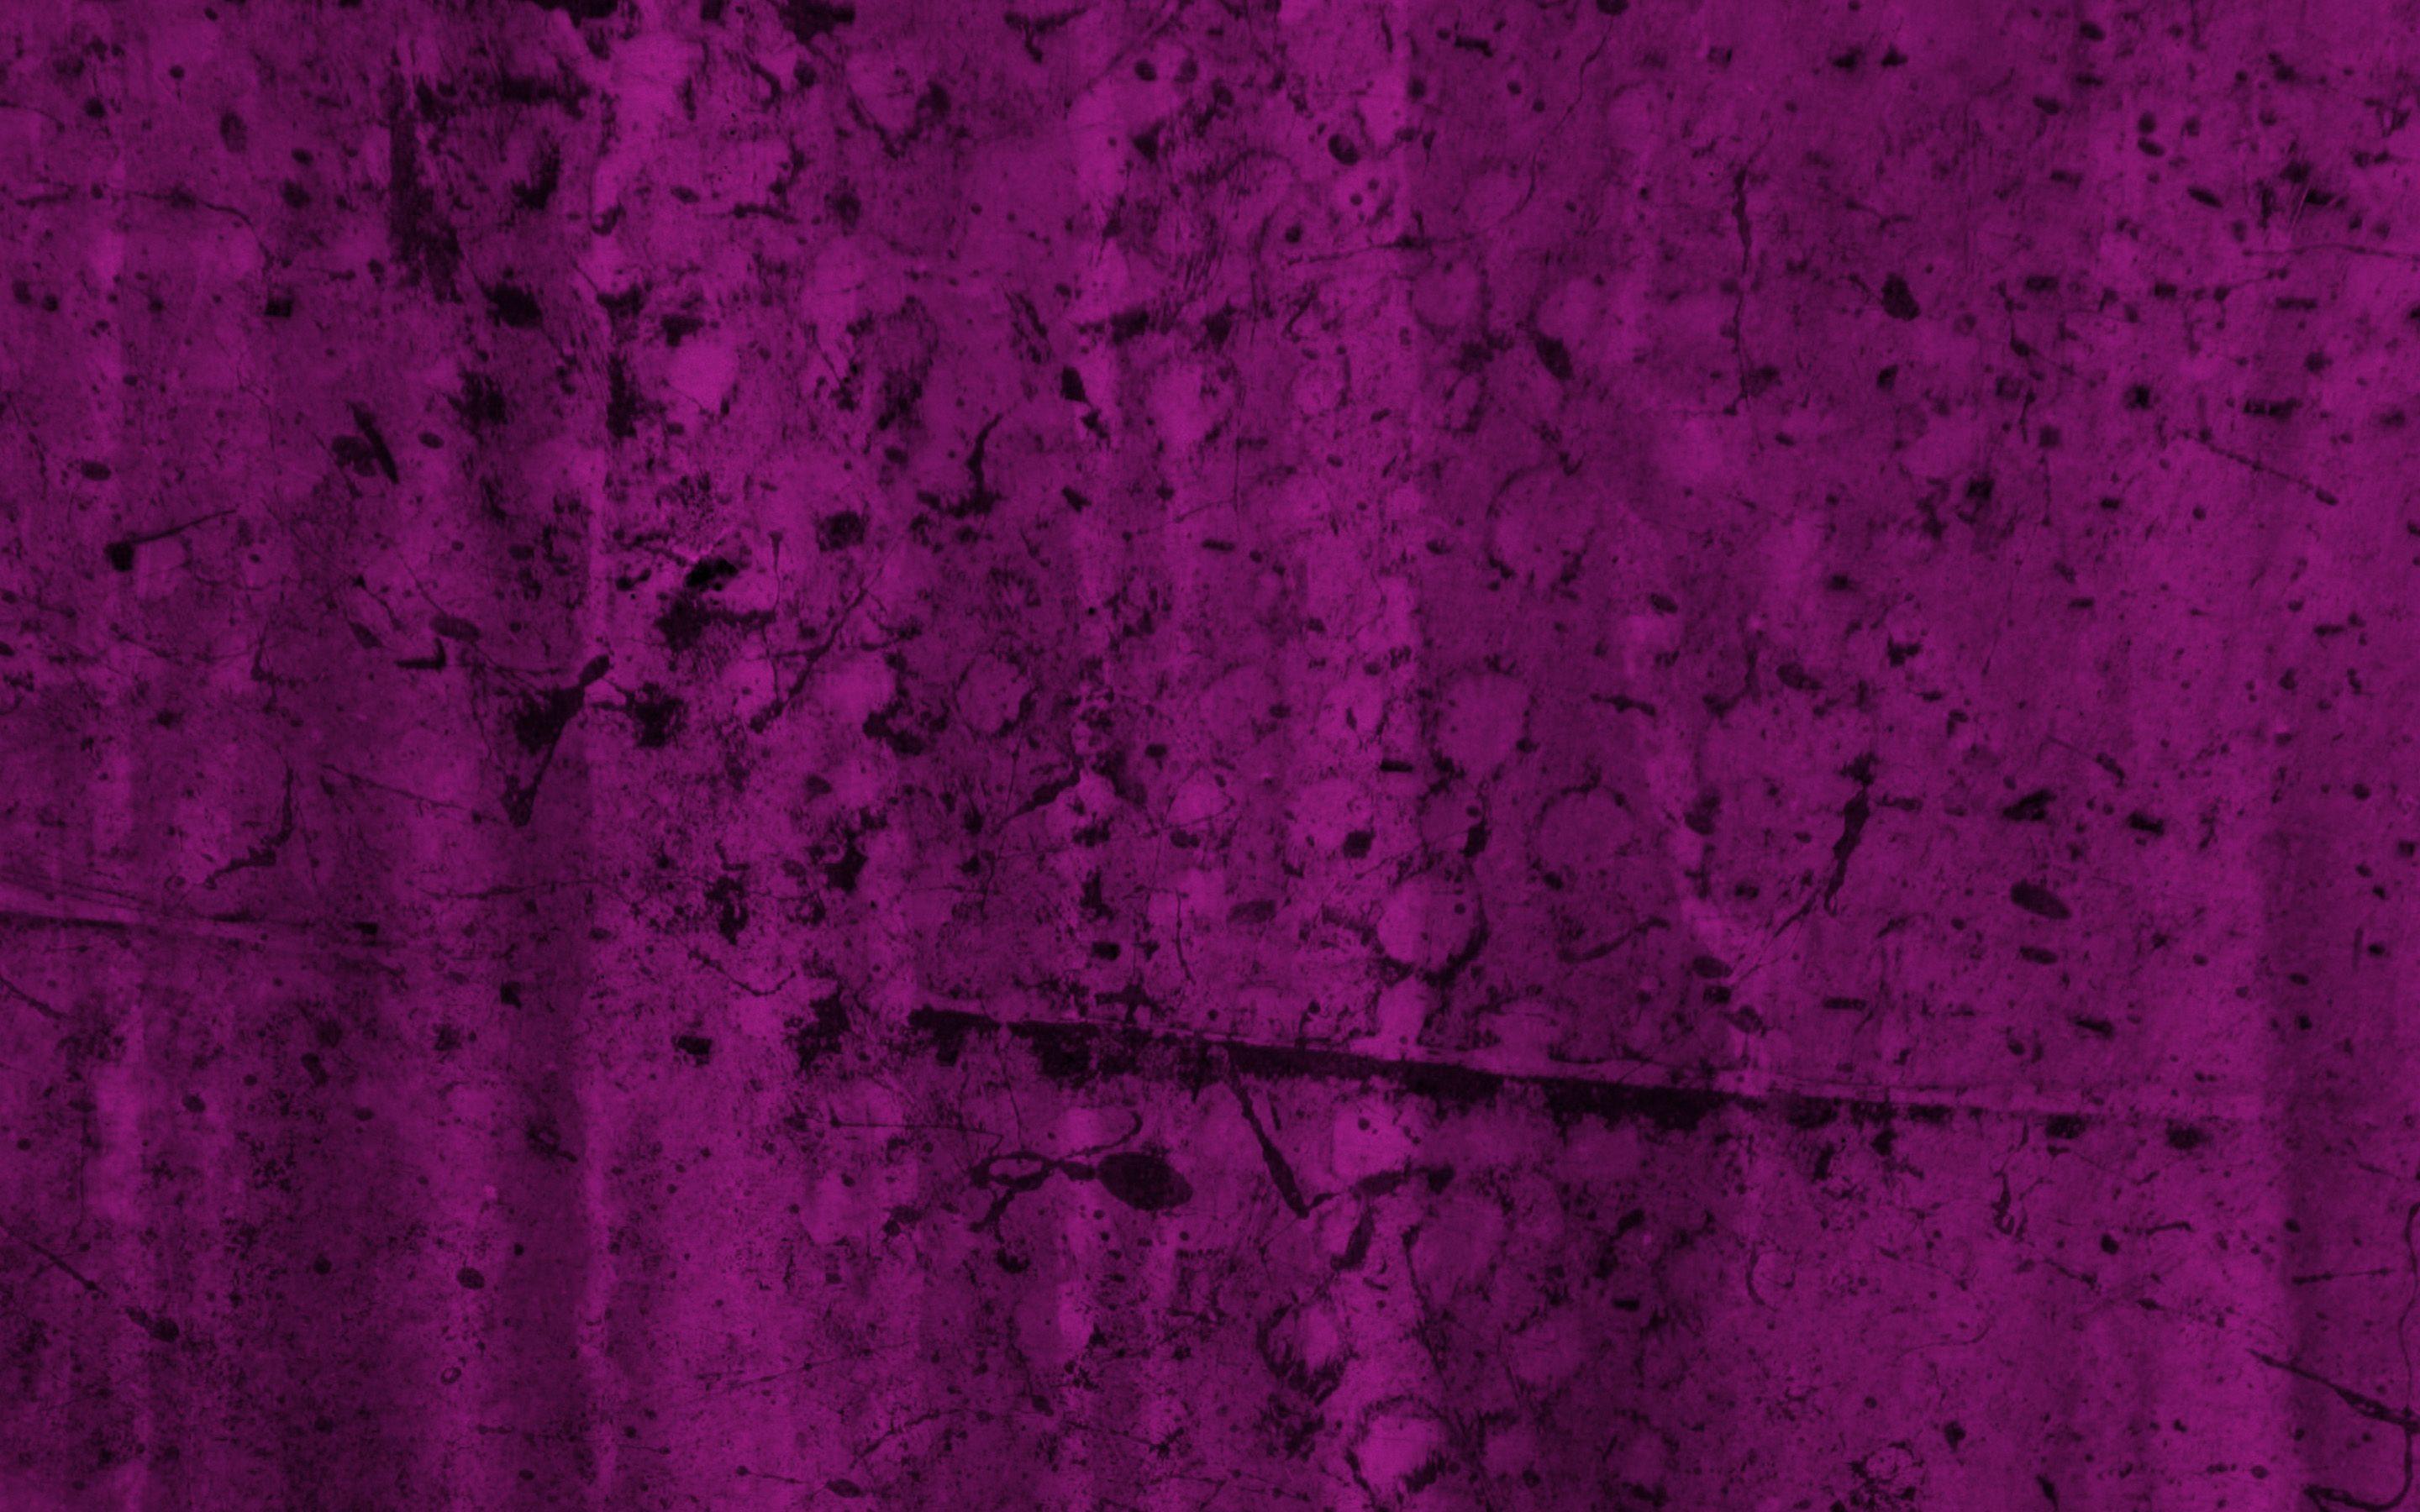 Purple Grunge Wallpapers - Top Free Purple Grunge Backgrounds ...